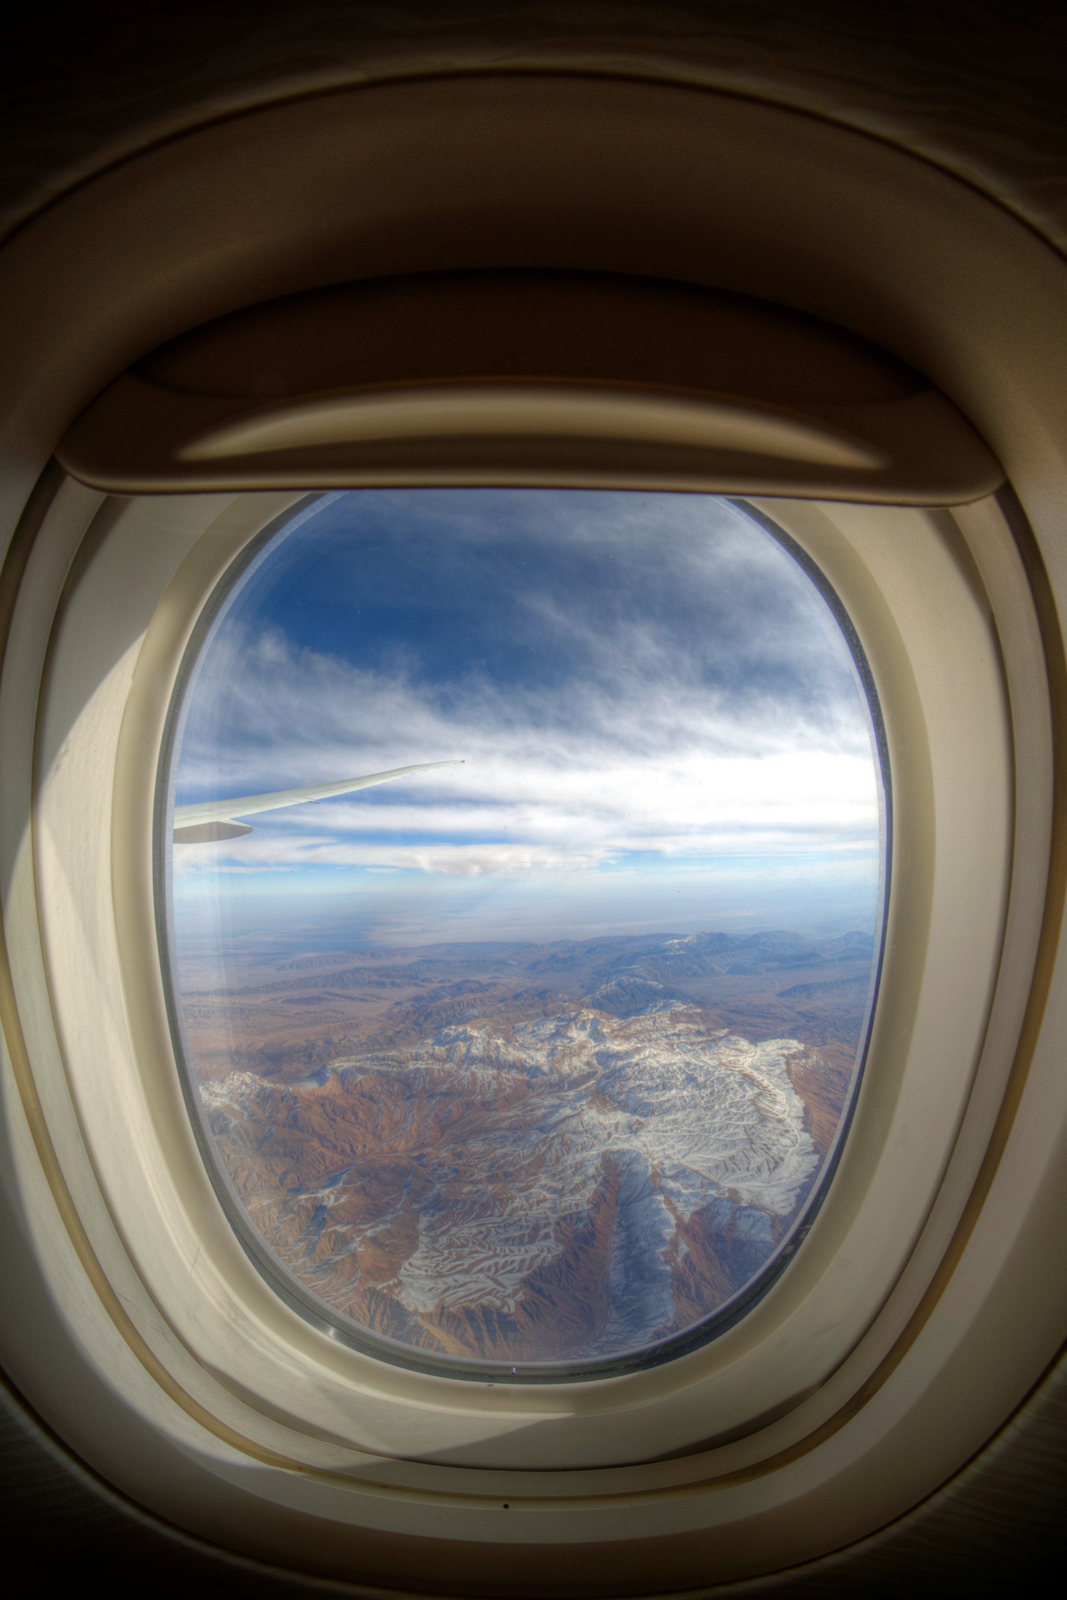 Iran from an Airplane Window